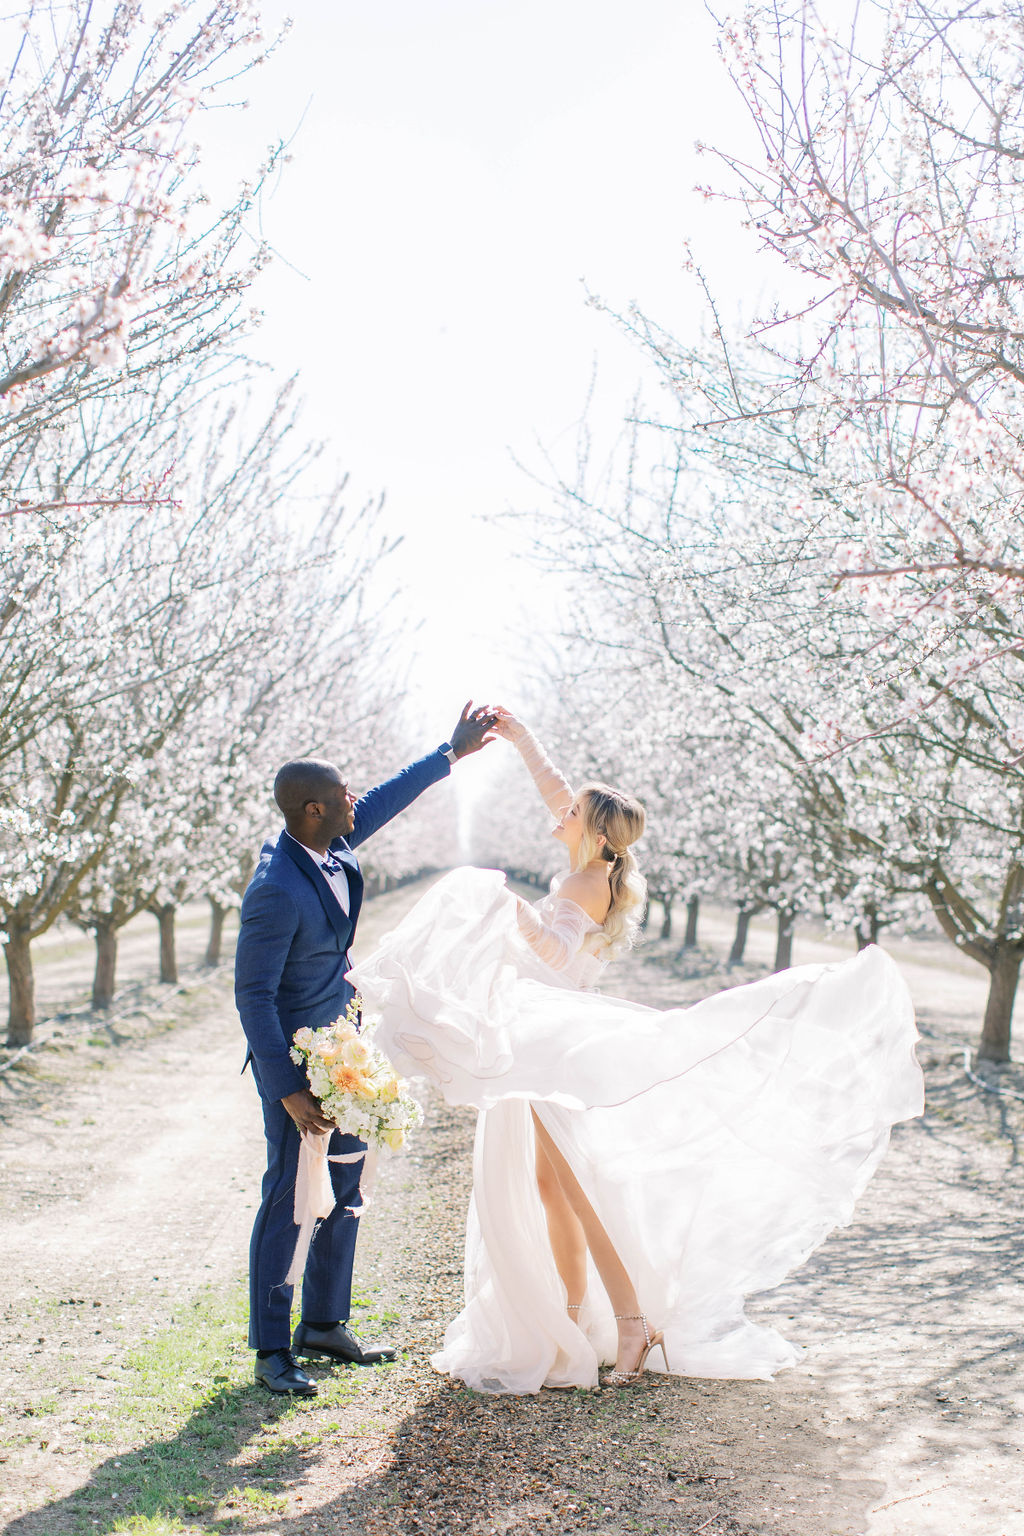 Katie Trauffer Photography I Fine Art Wedding Photography I California Almond Blossom Wedding